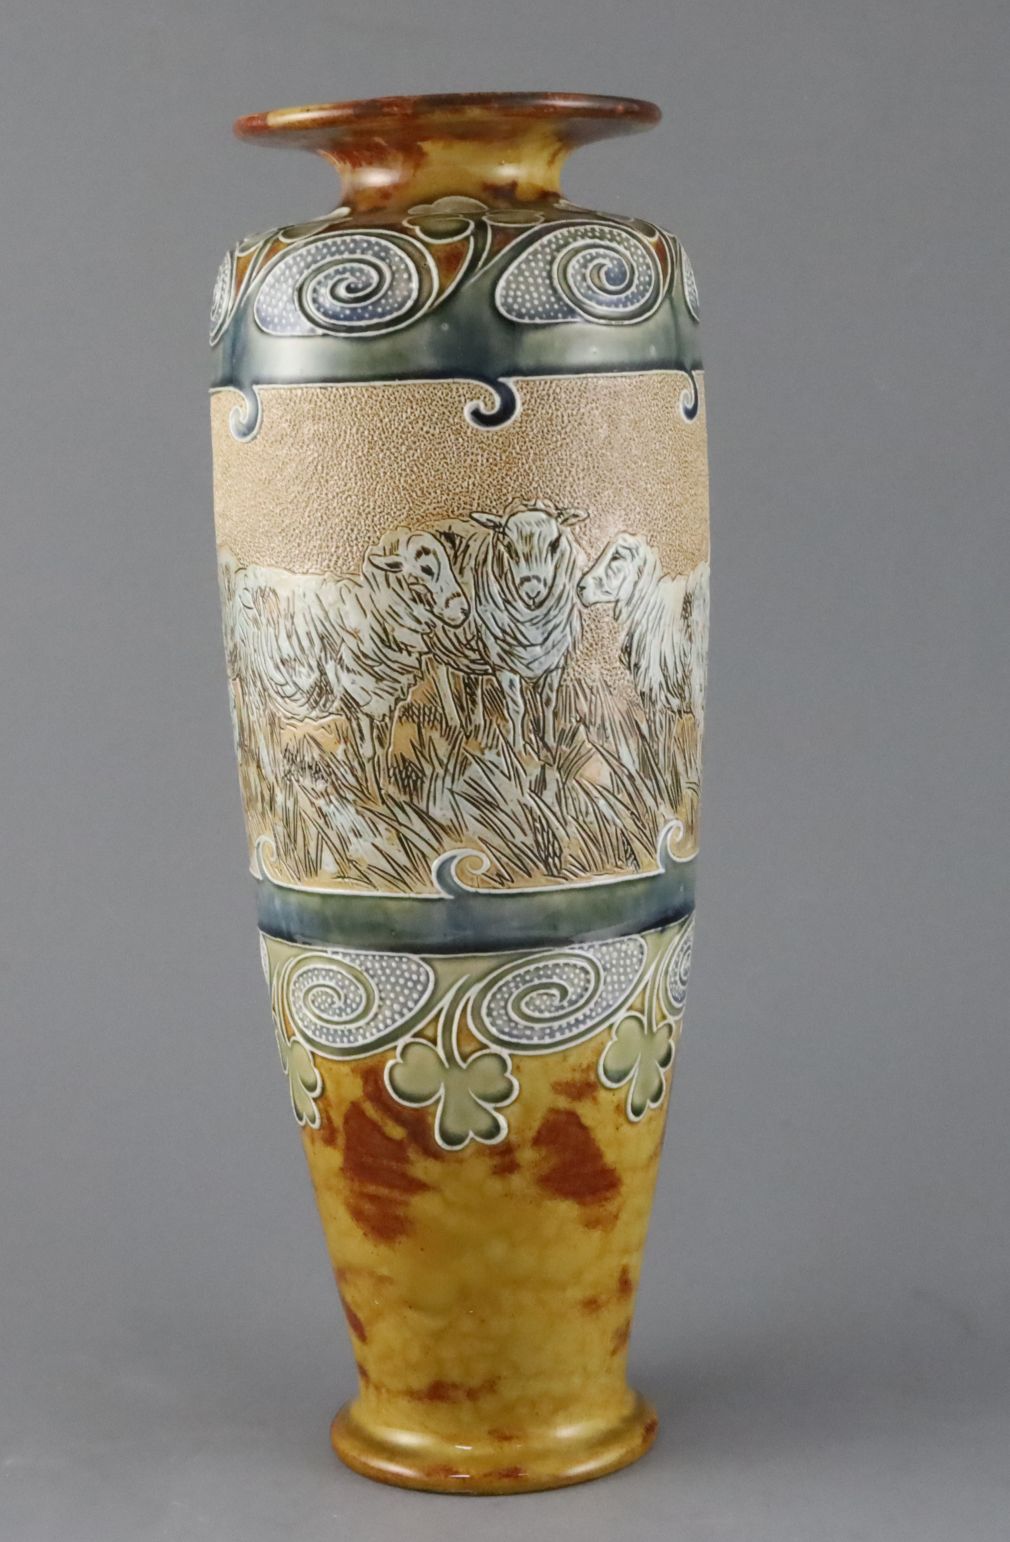 Hannah Barlow for Royal Doulton, a tall 'sheep' sgraffito vase, c.1905, impressed mark and incised